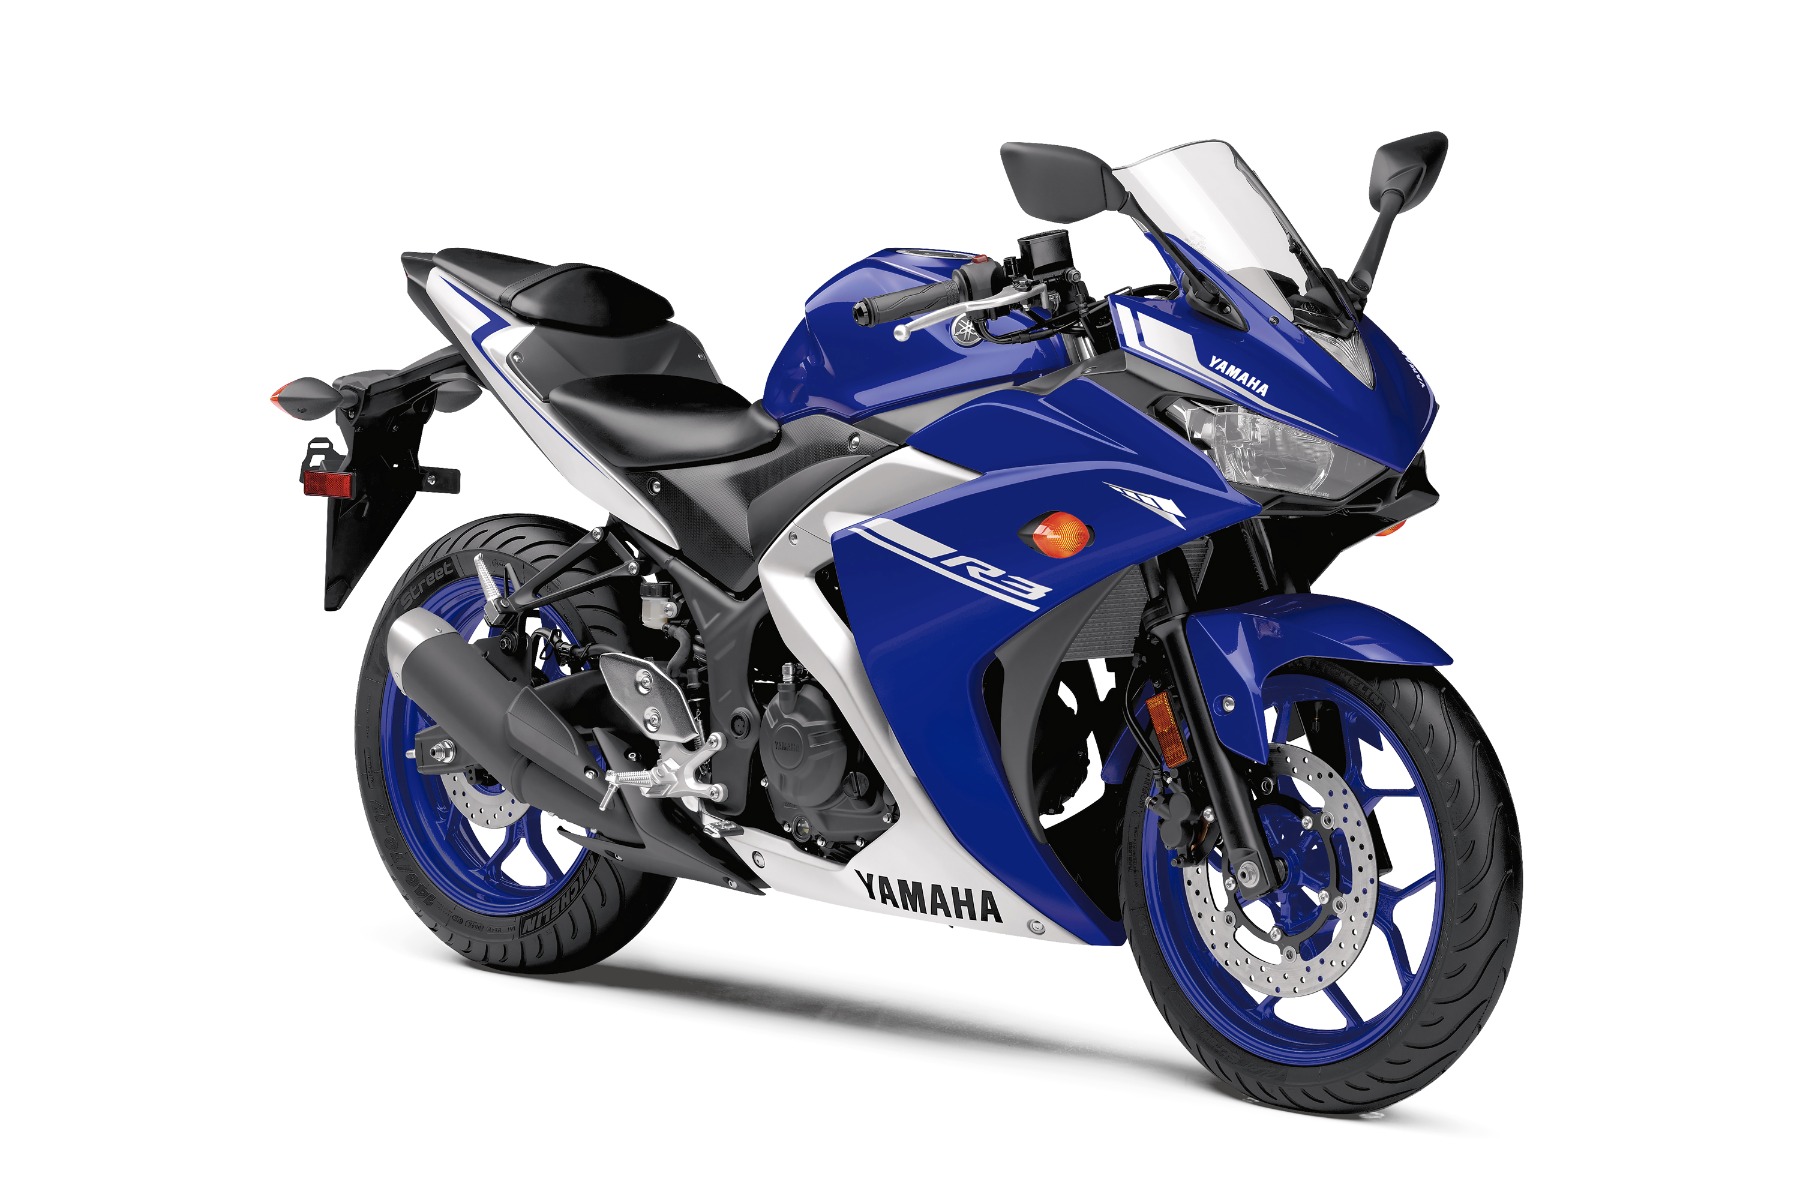 Yamaha Motorcycle Price in Pakistan 2019 New Model